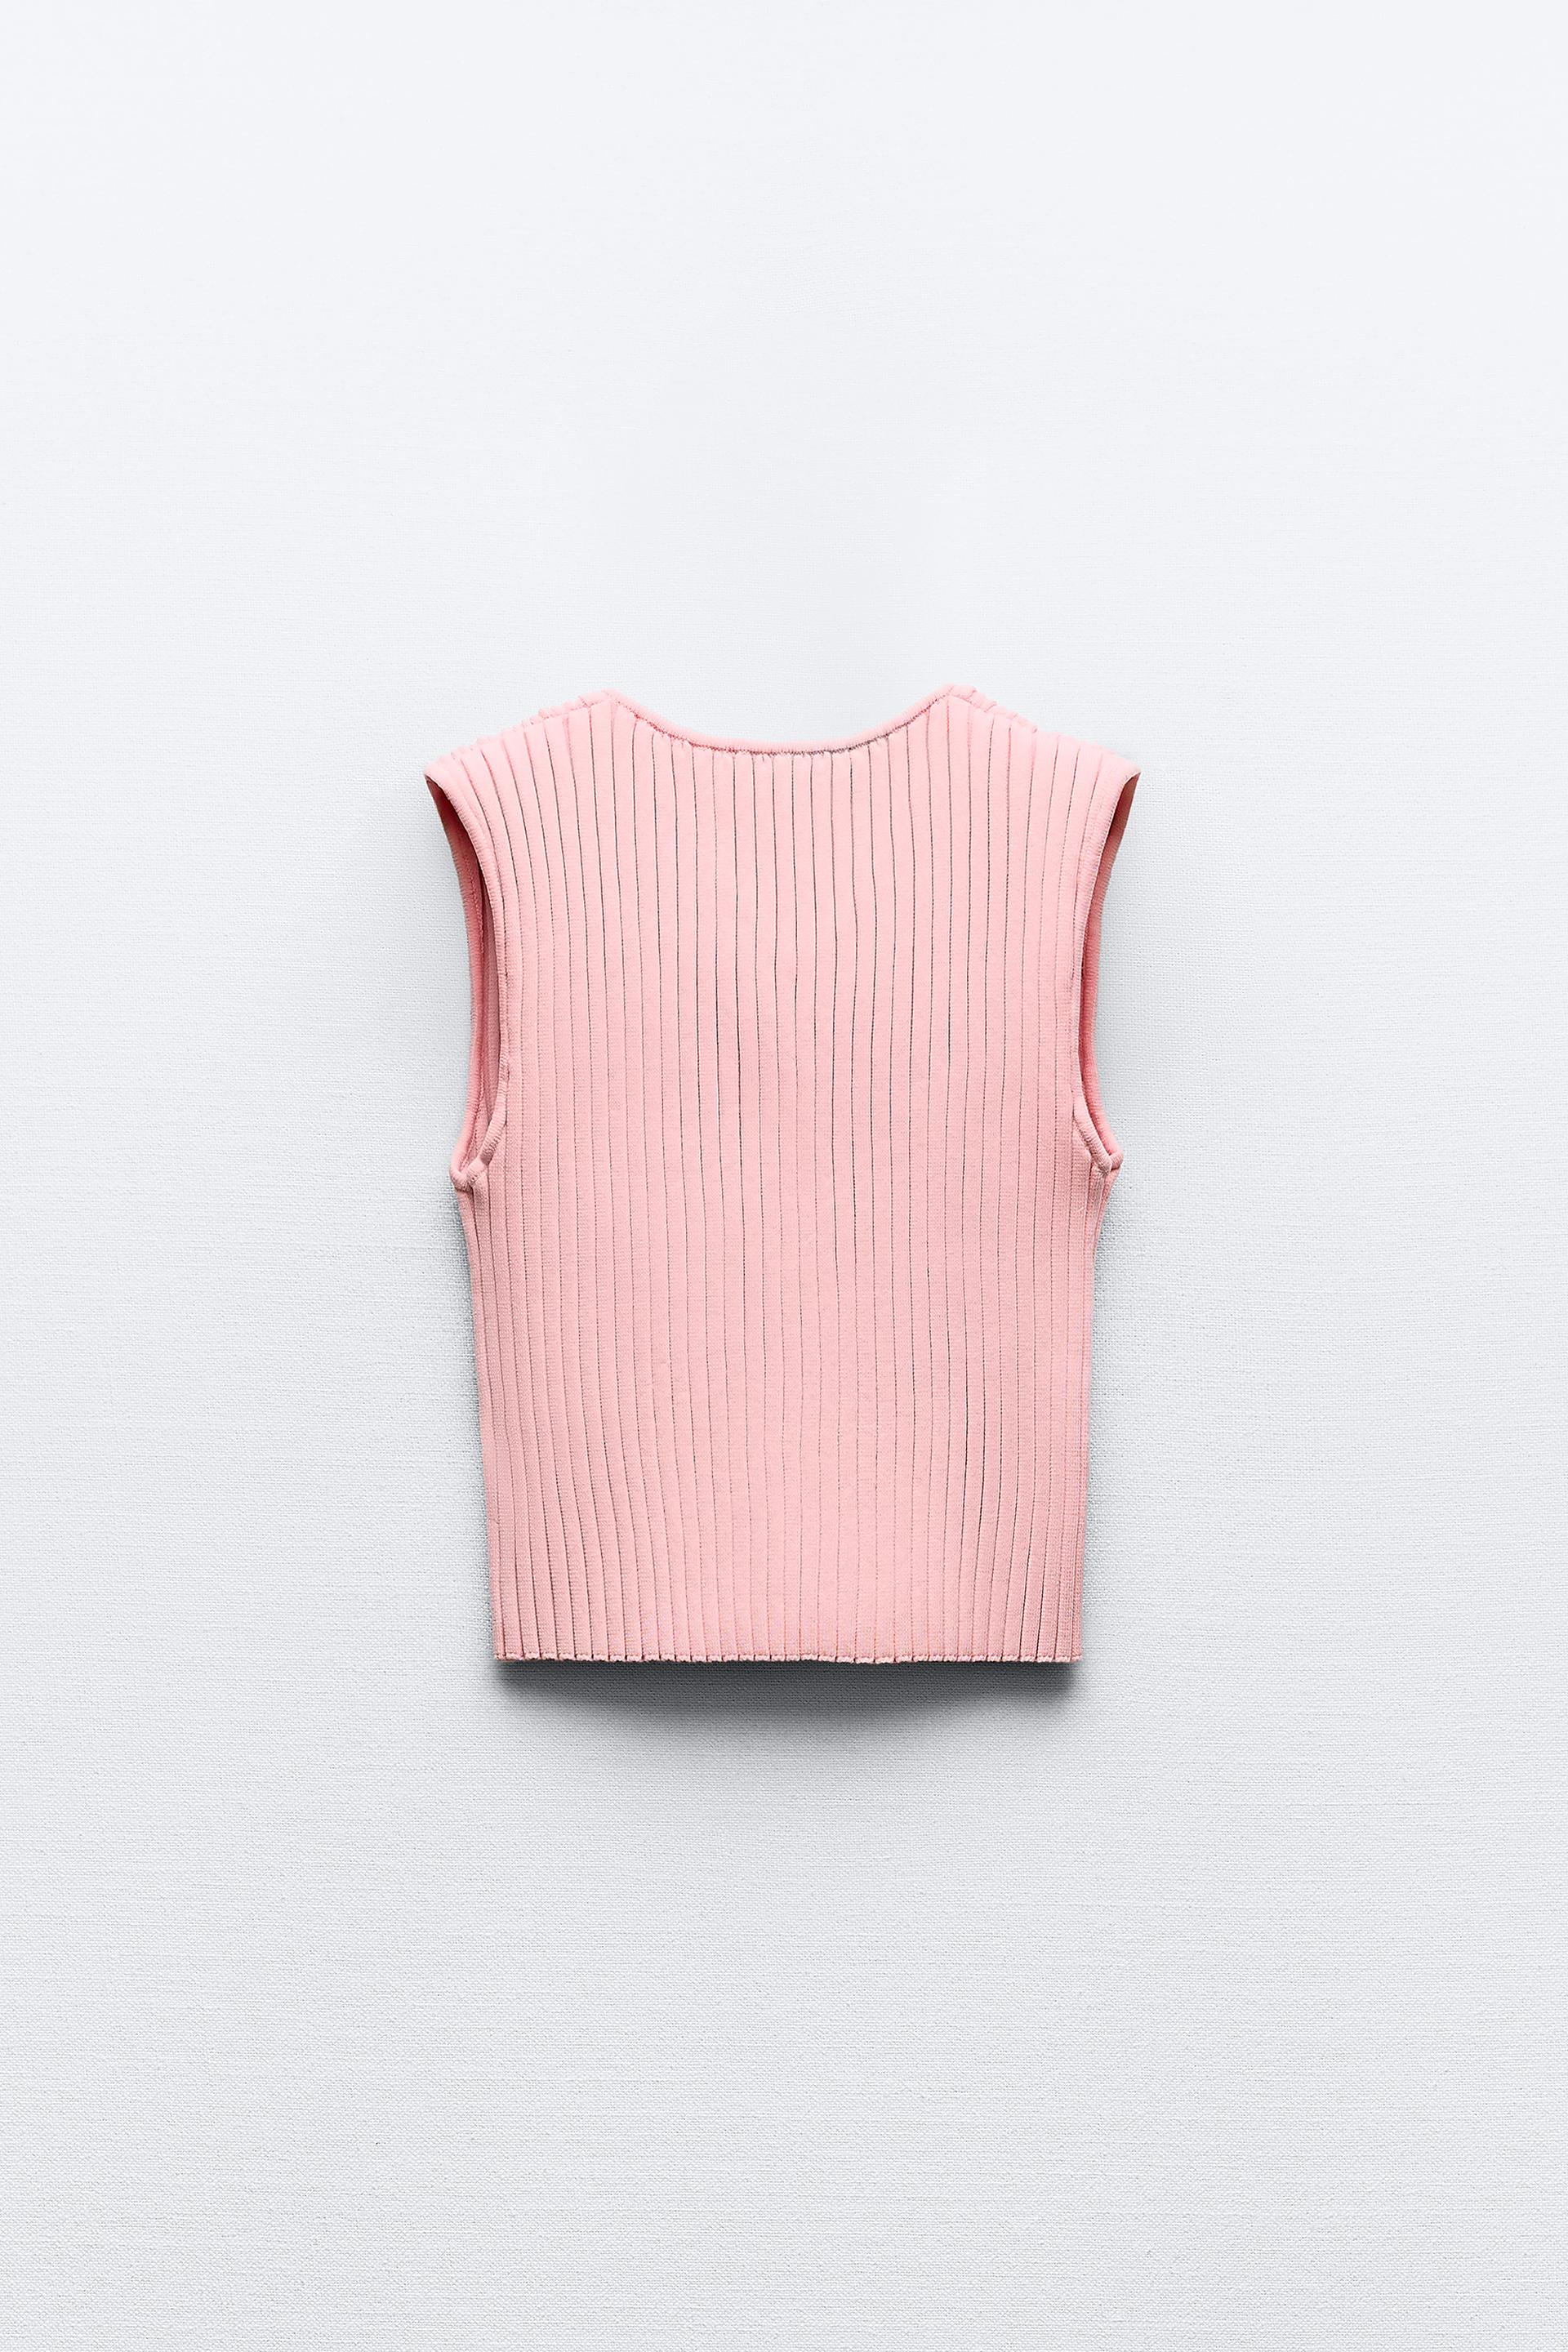 Light Pink Cropped Knit Top  Knit crop top, Light pink tops, Pink crop top